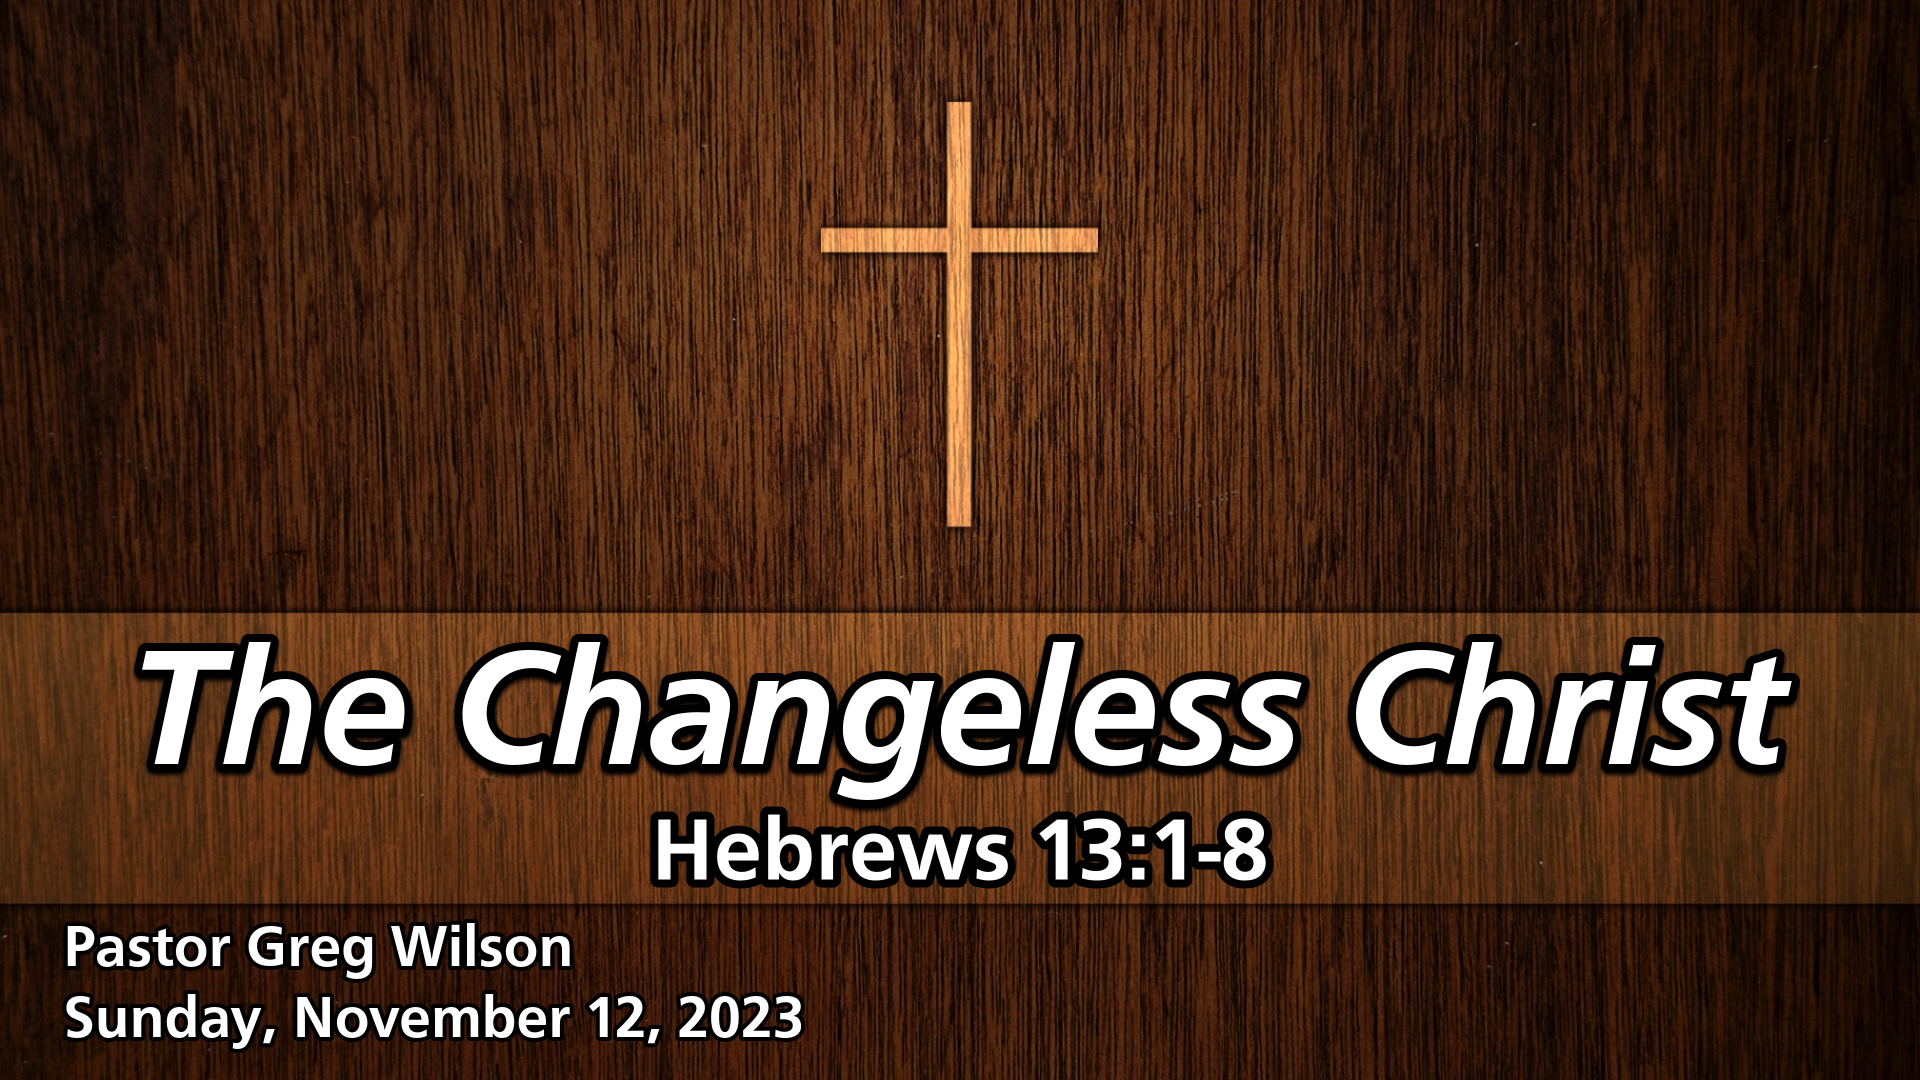 "The Changeless Christ"